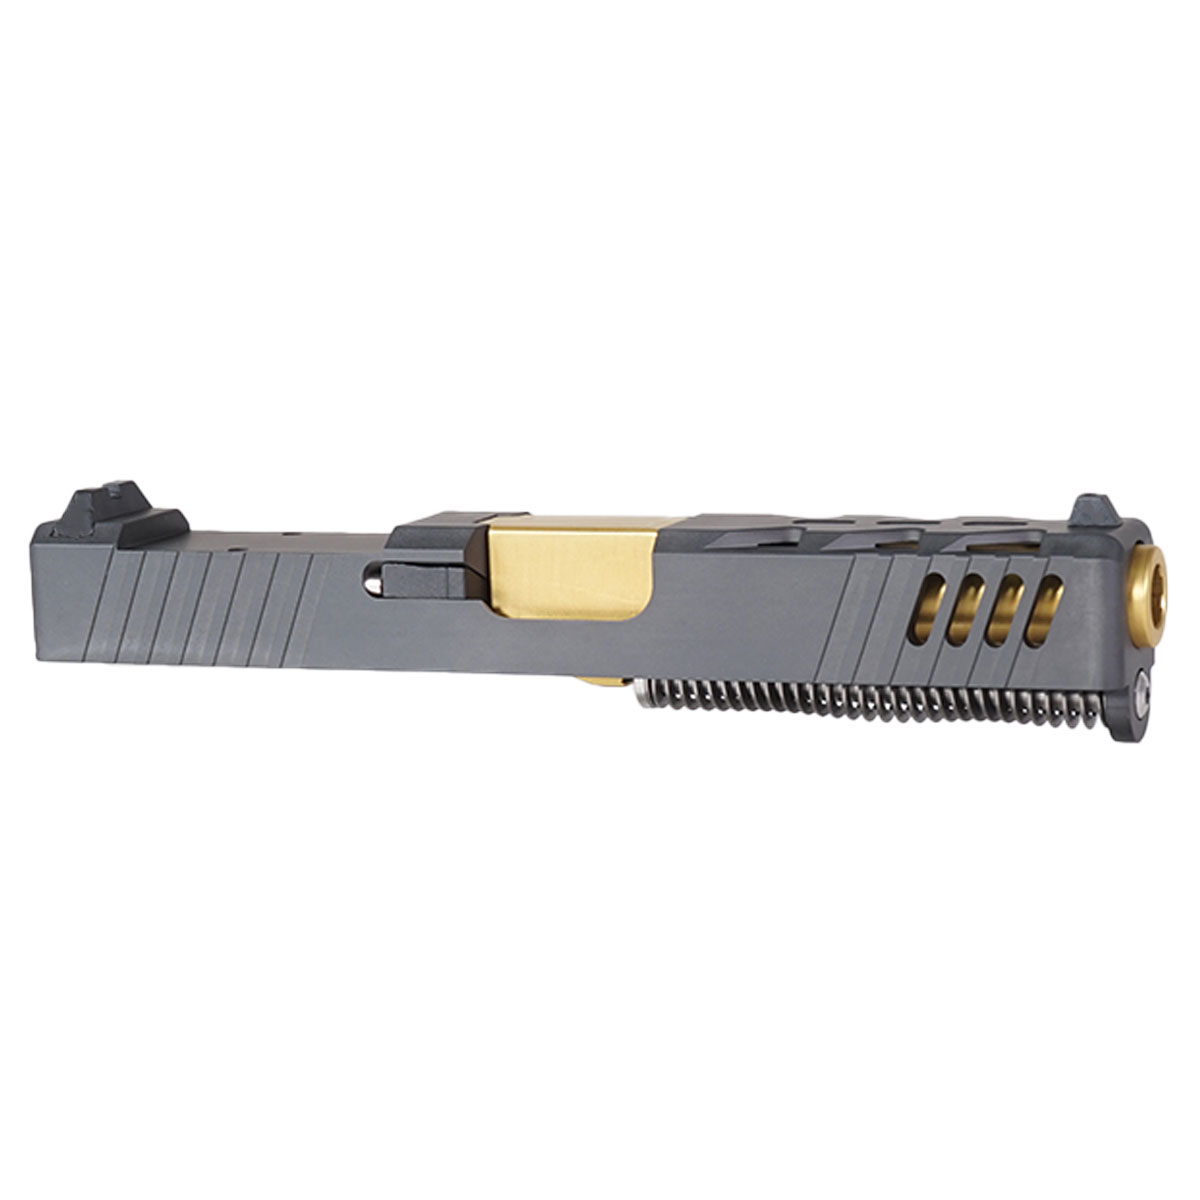 DD 'High Ground' 9mm Complete Slide Kit - Glock 19 Gen 1-3 Compatible